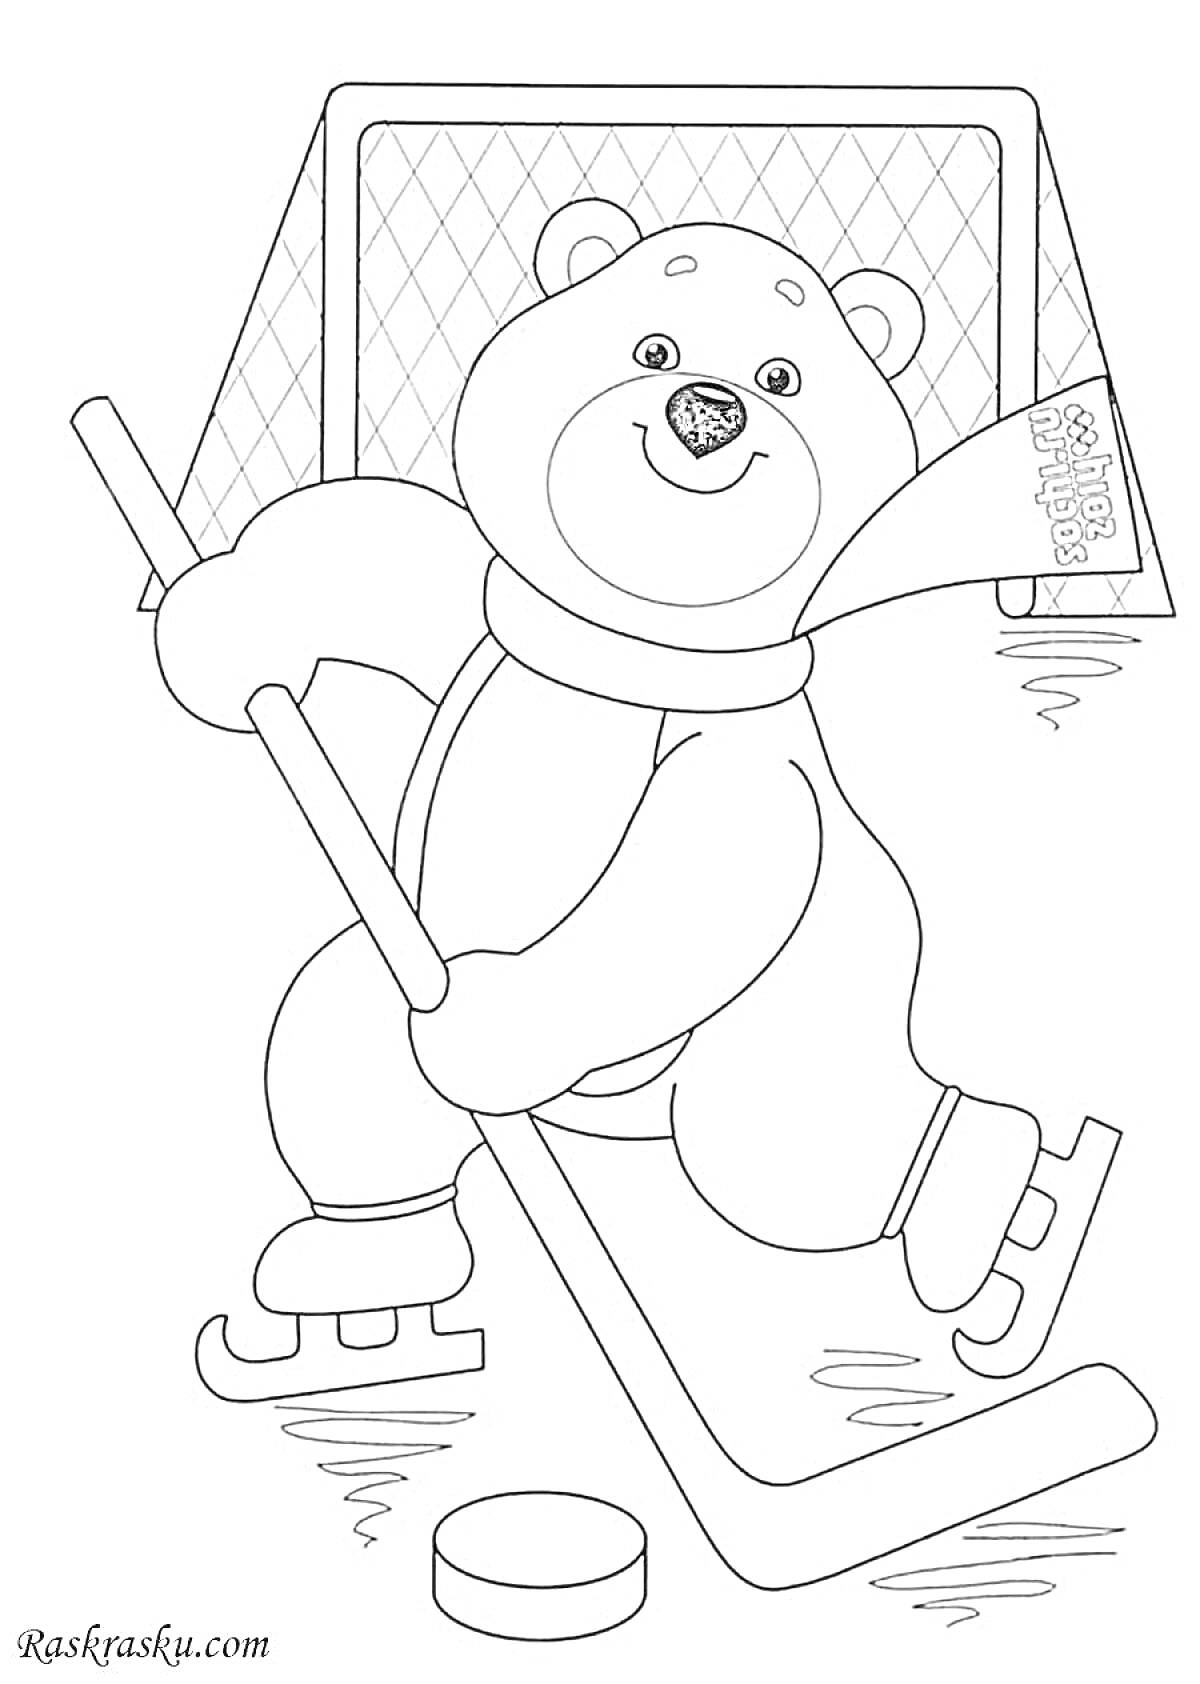 На раскраске изображено: Хоккей, Лед, Ворота, Клюшка, Шайба, Спорт, Зима